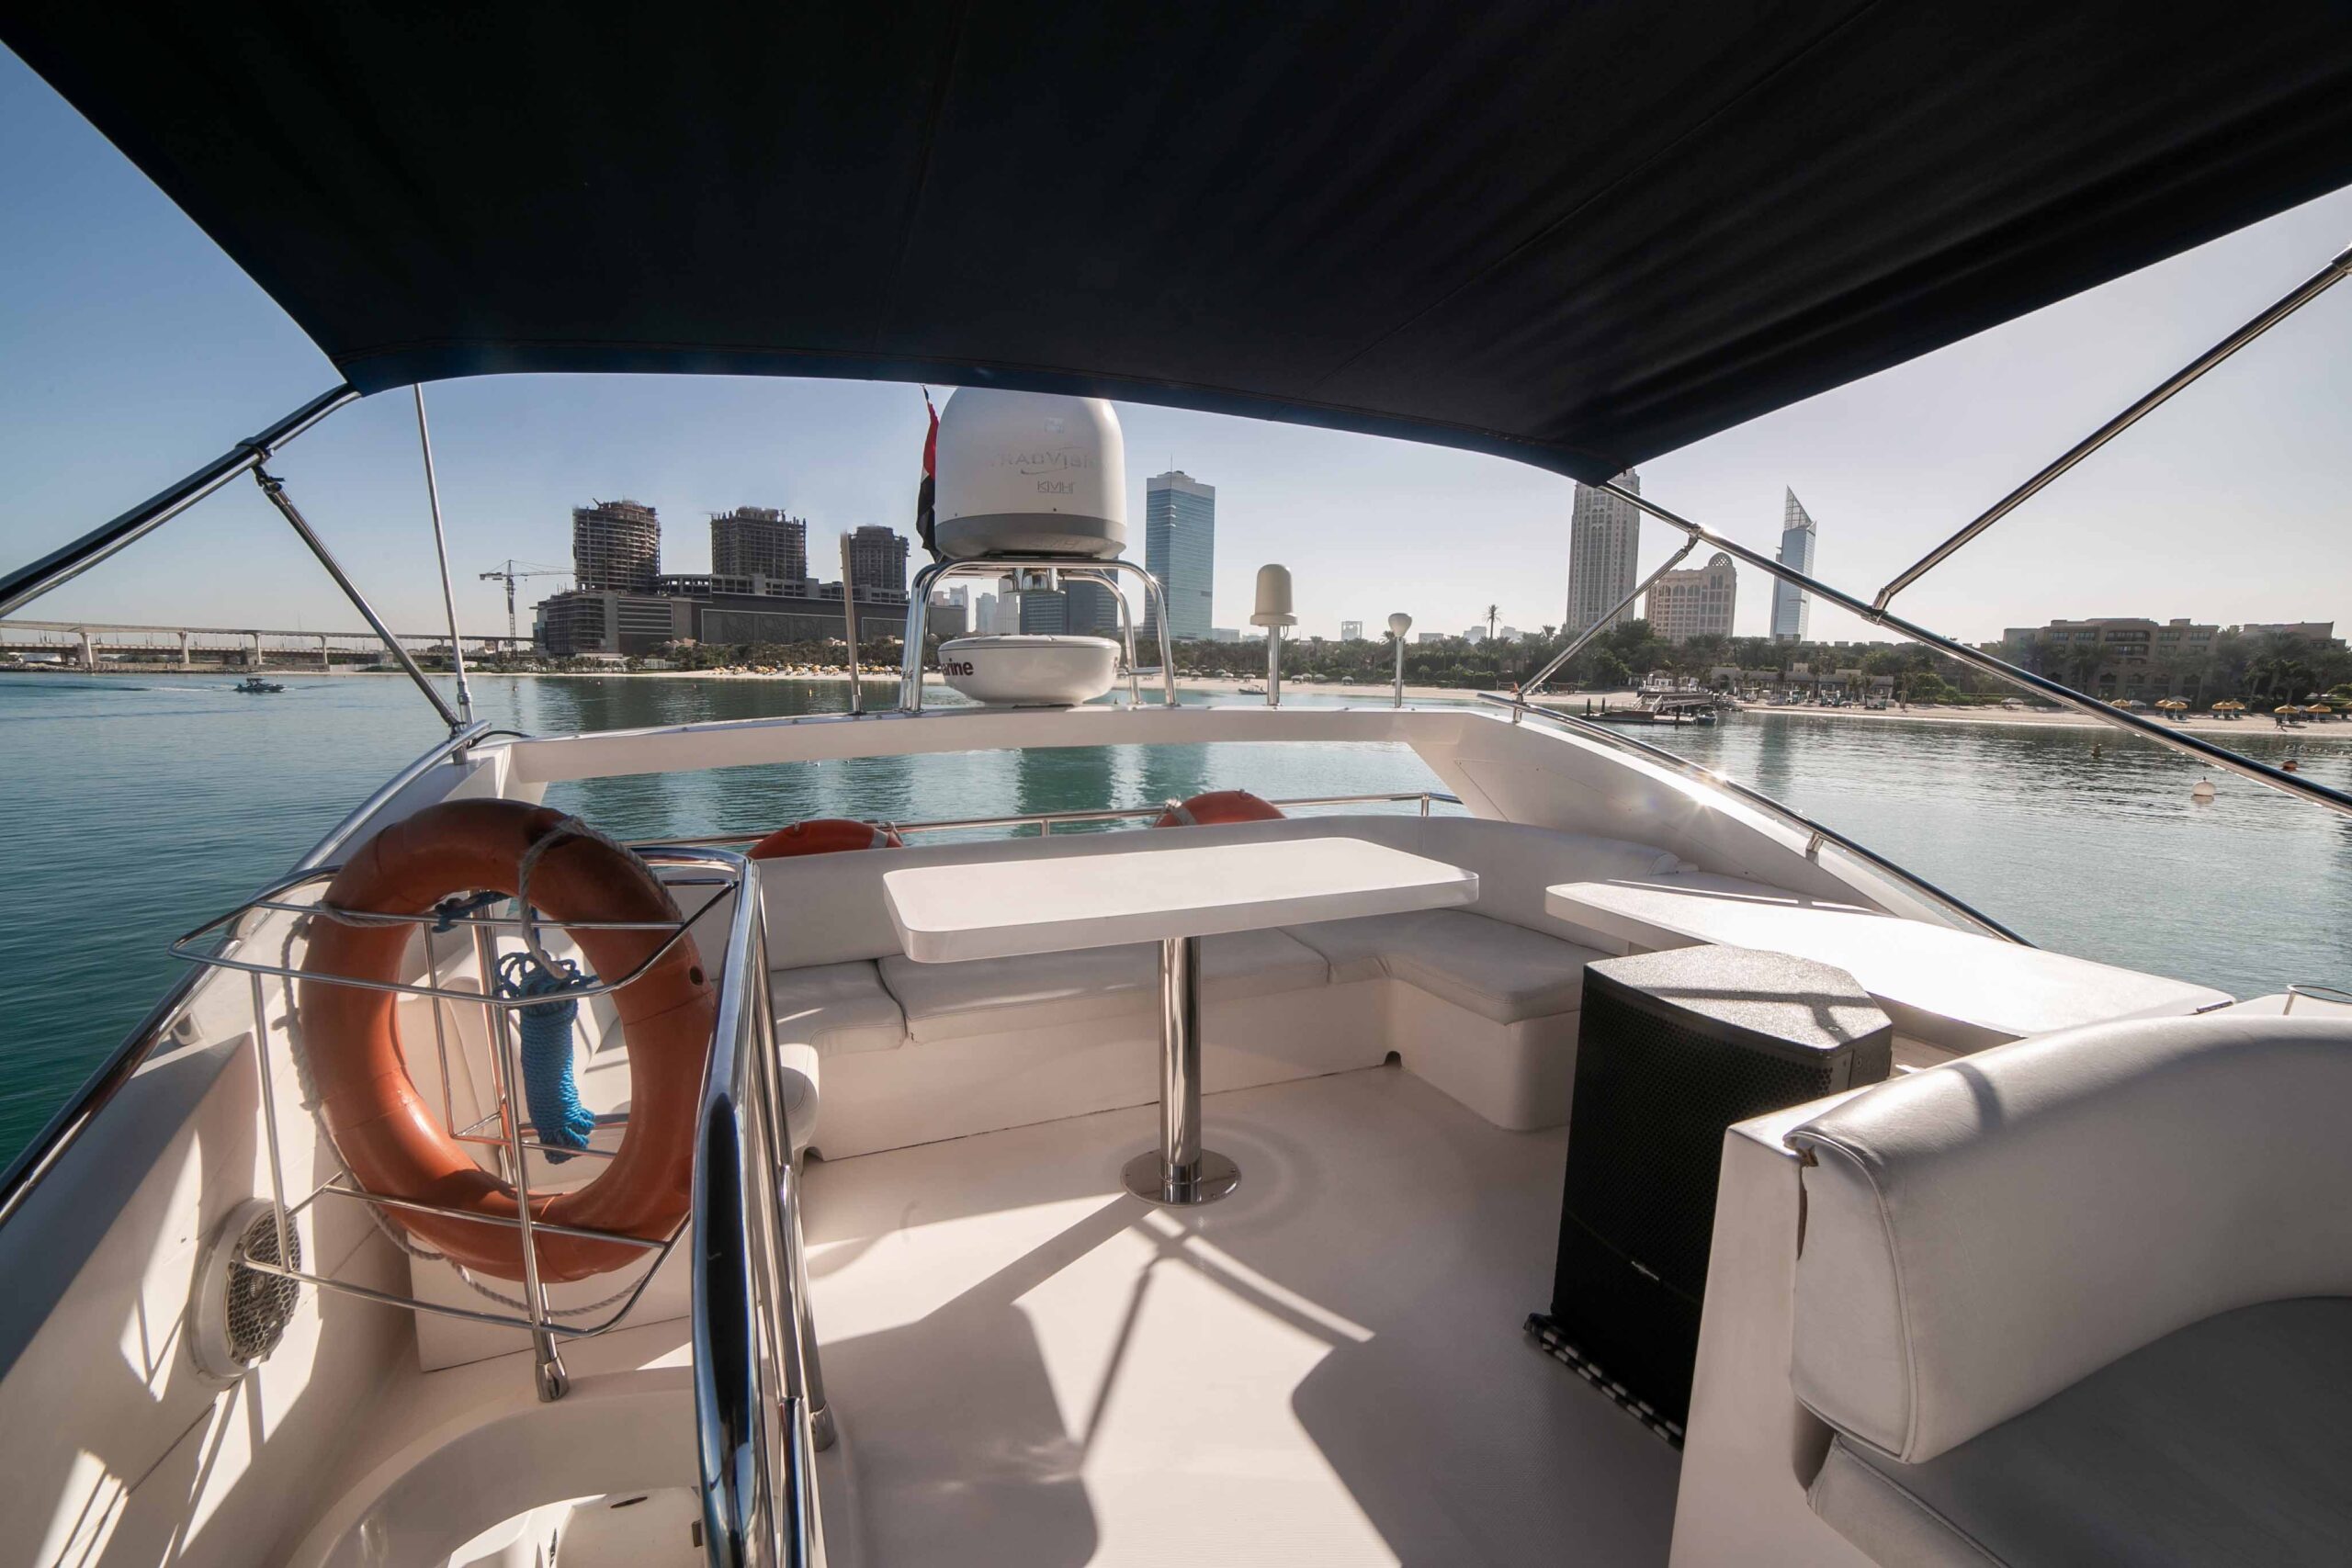 Explorer Goldeon Nightingale 55 ft. private yacht Dubai